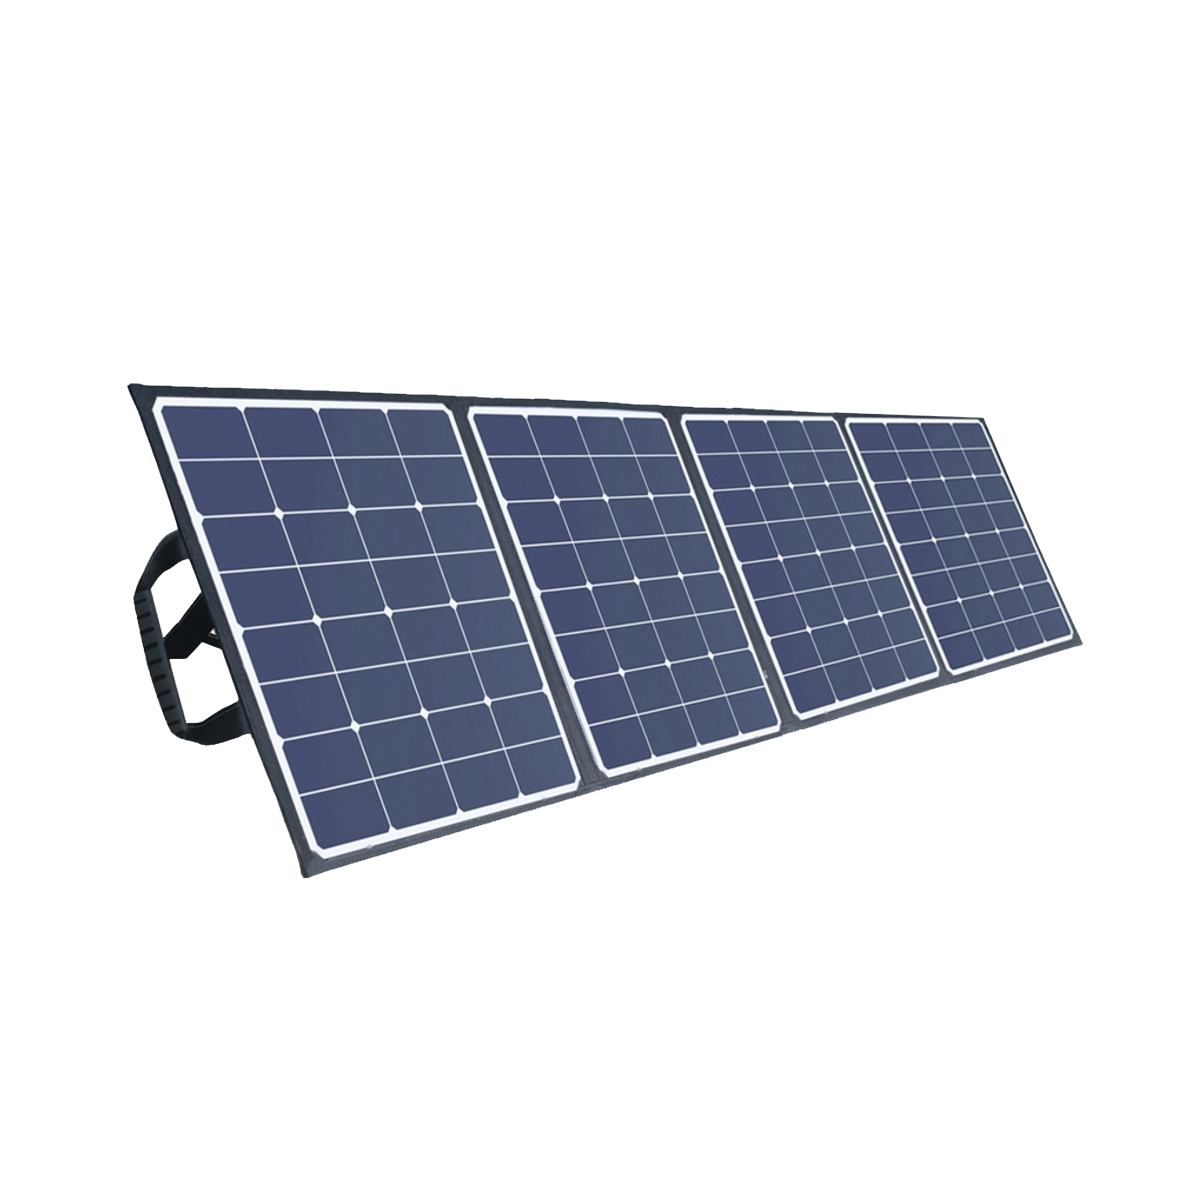 Southwire Elite Series 53224 Monocrystalline Portable Solar Panel, 100 W, 18 V, ETFE - 1